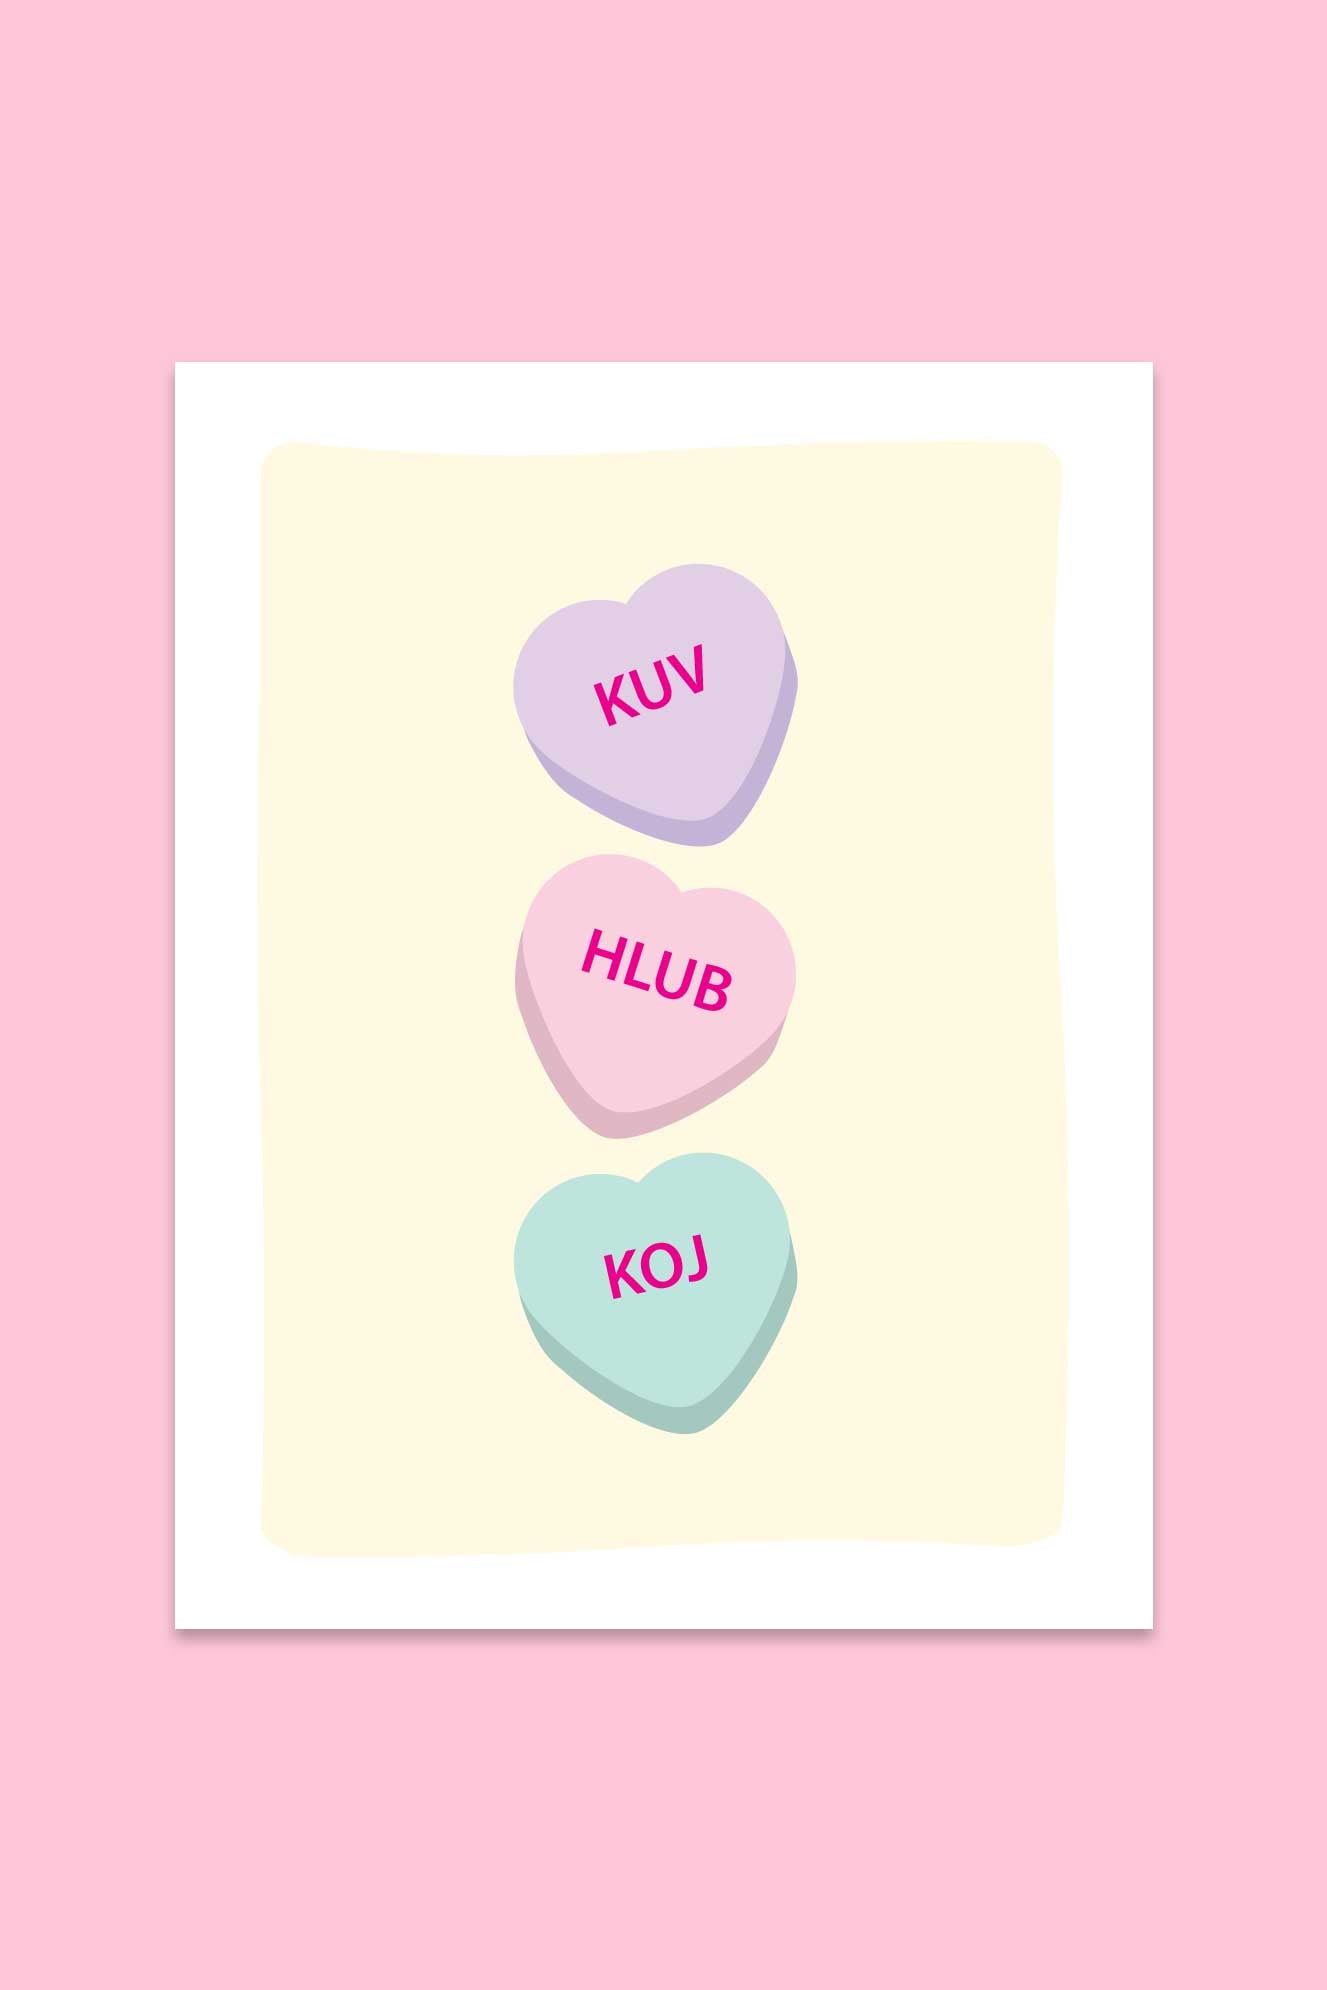 "Kuv Hlub Koj" Heart Candy Greeting Card